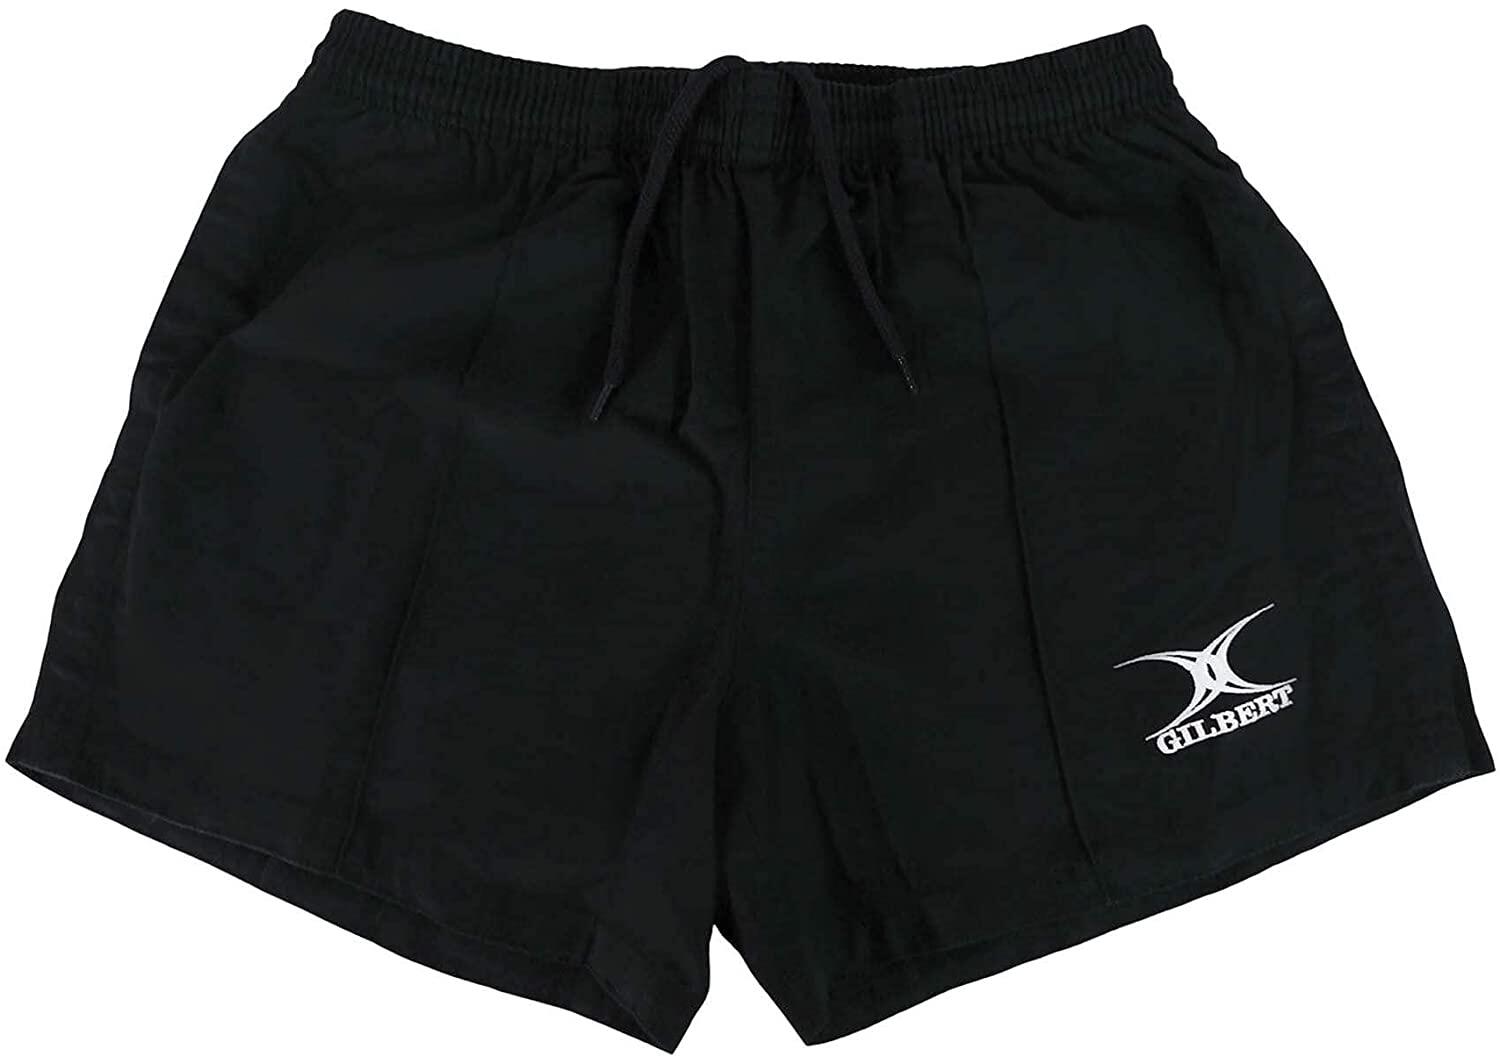 Kiwi Pro Shorts, Black 4/4